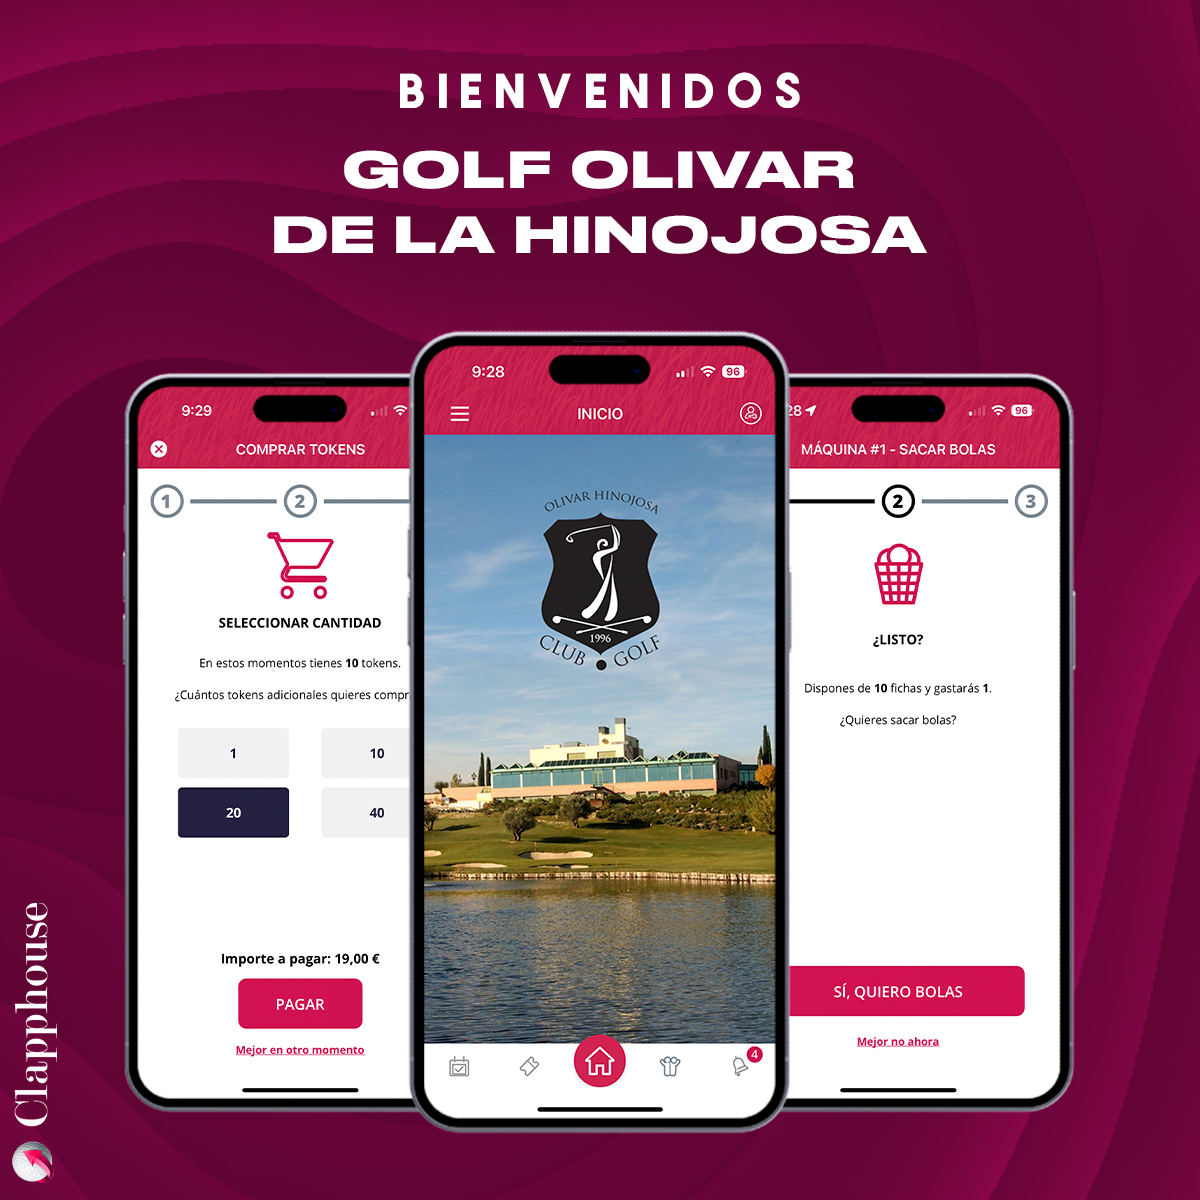 Golf Olivar de la Hinojosa se incorpora a Clapphouse